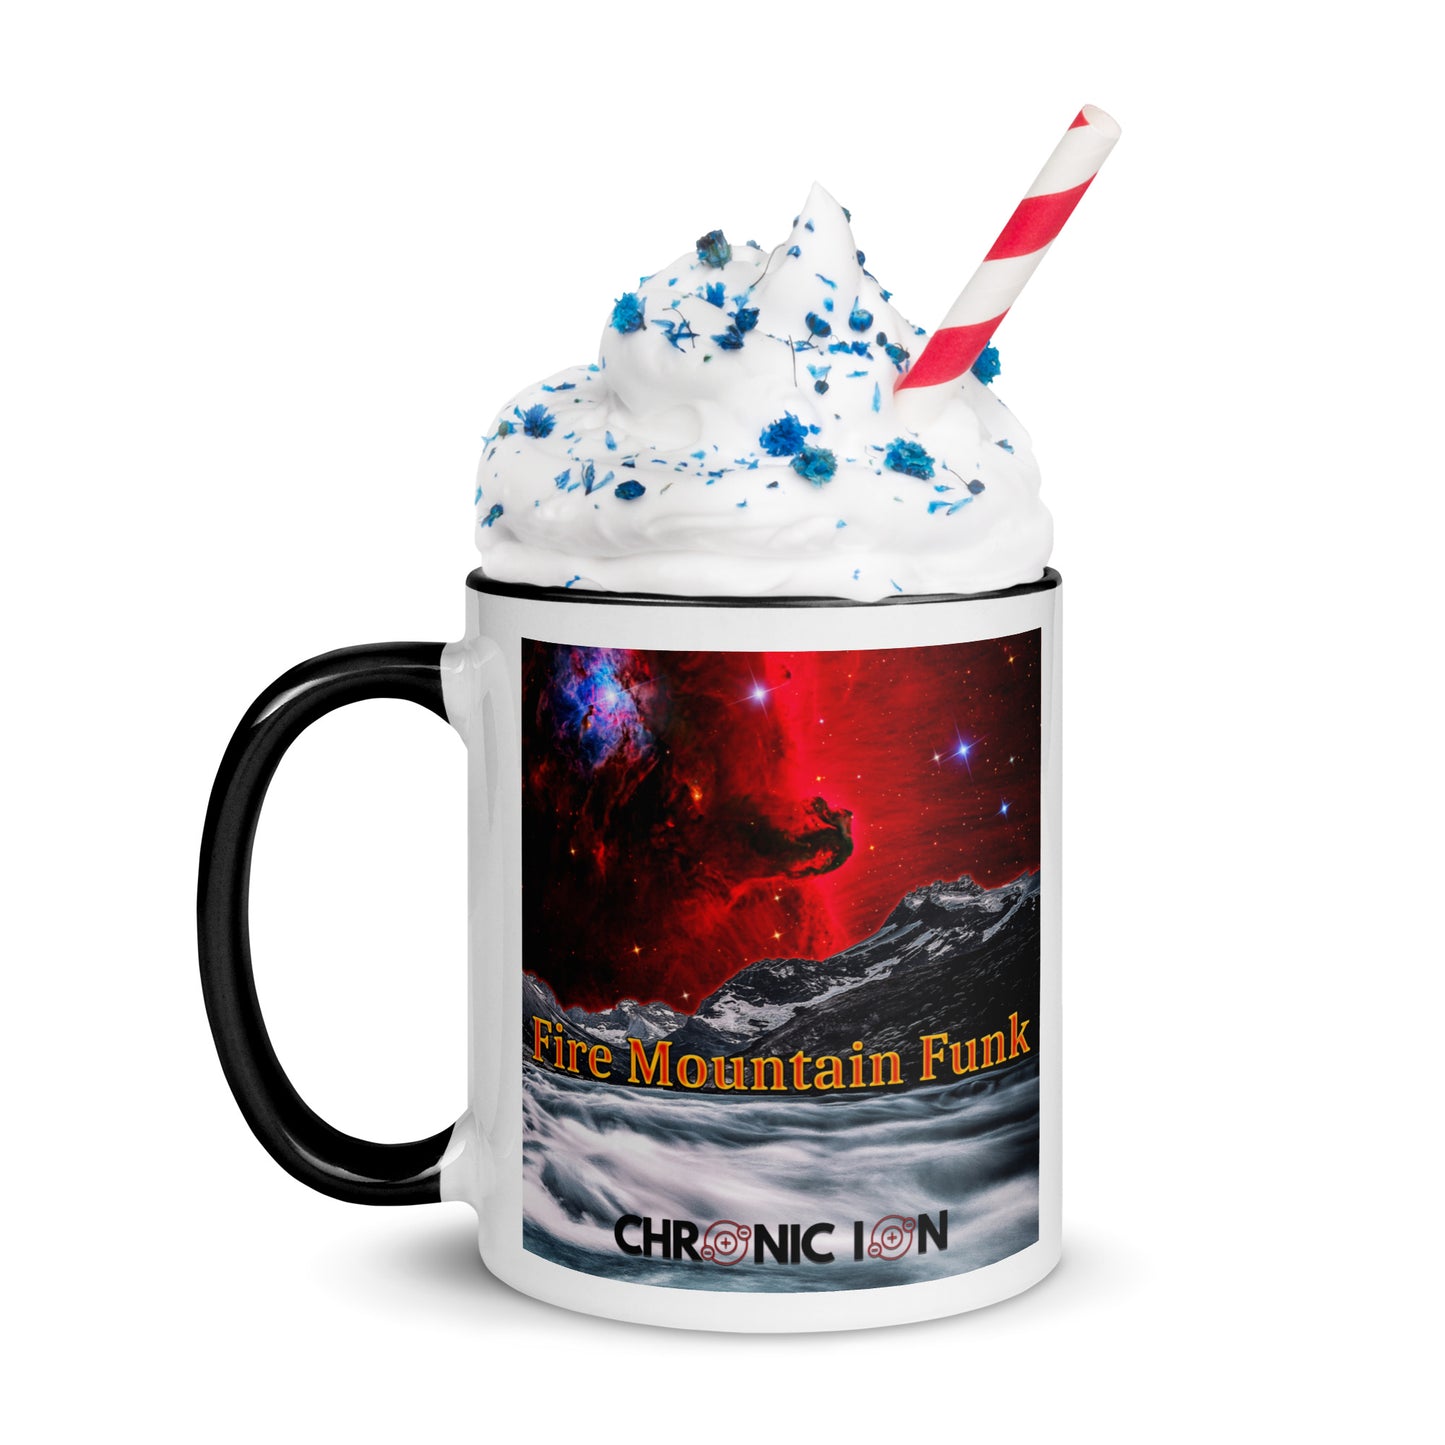 Chronic Ion - Fire Mountain Funk Mug With Color Inside